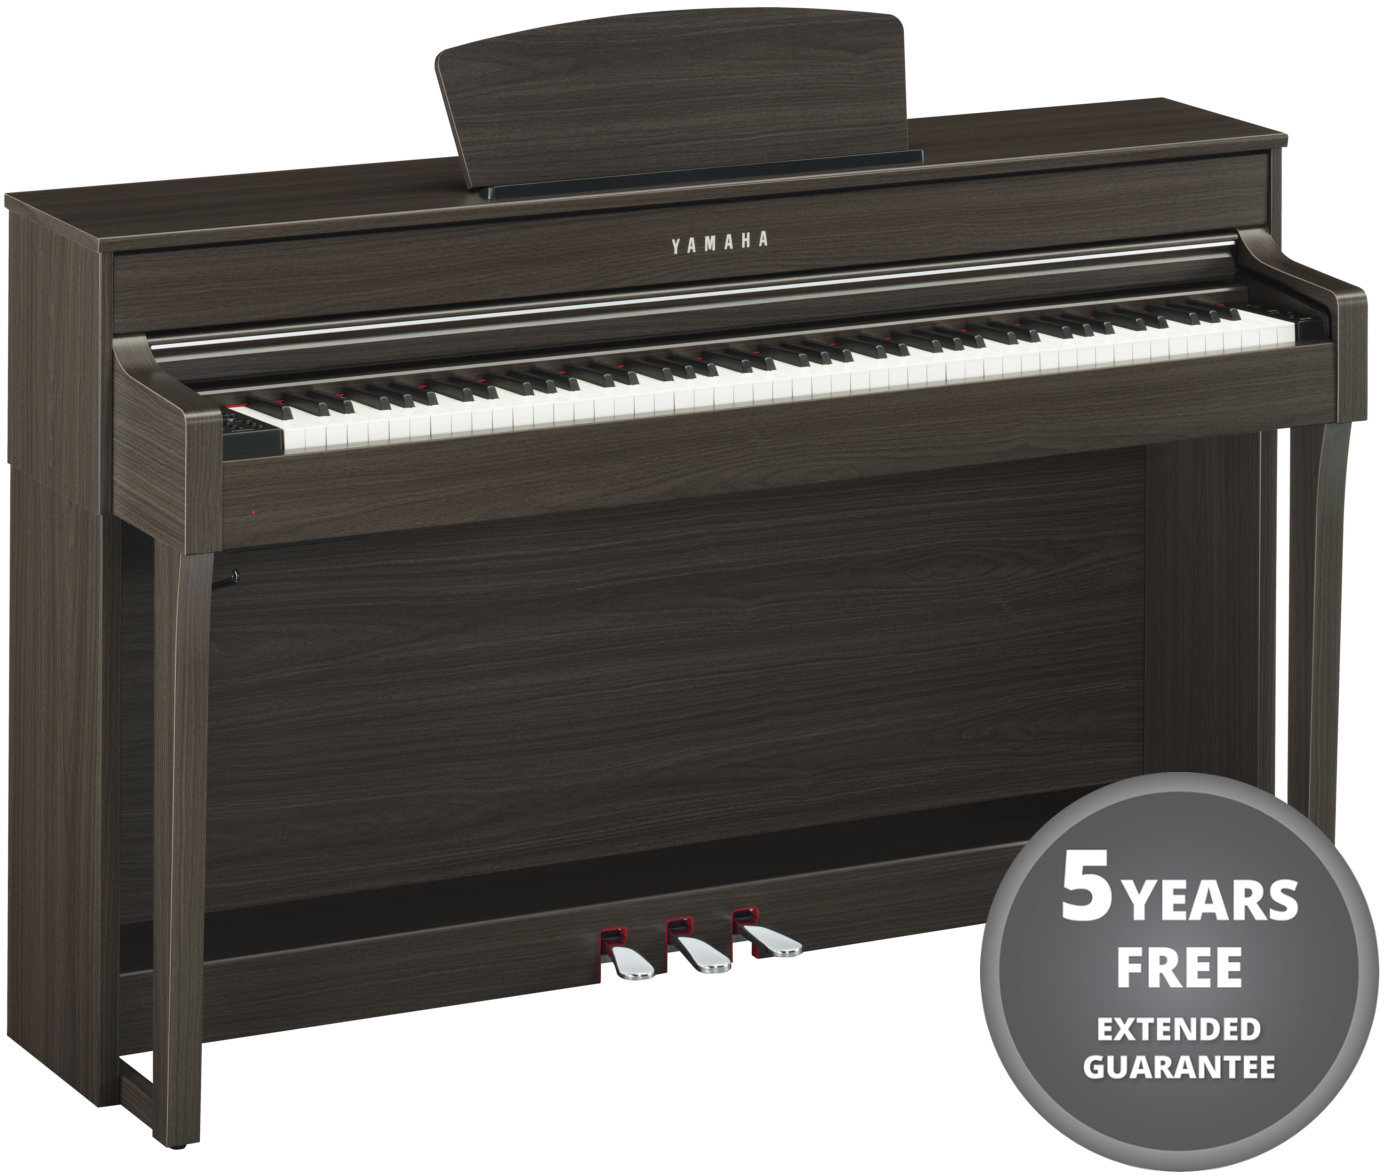 Piano digital Yamaha CLP-635 Dark Walnut Piano digital